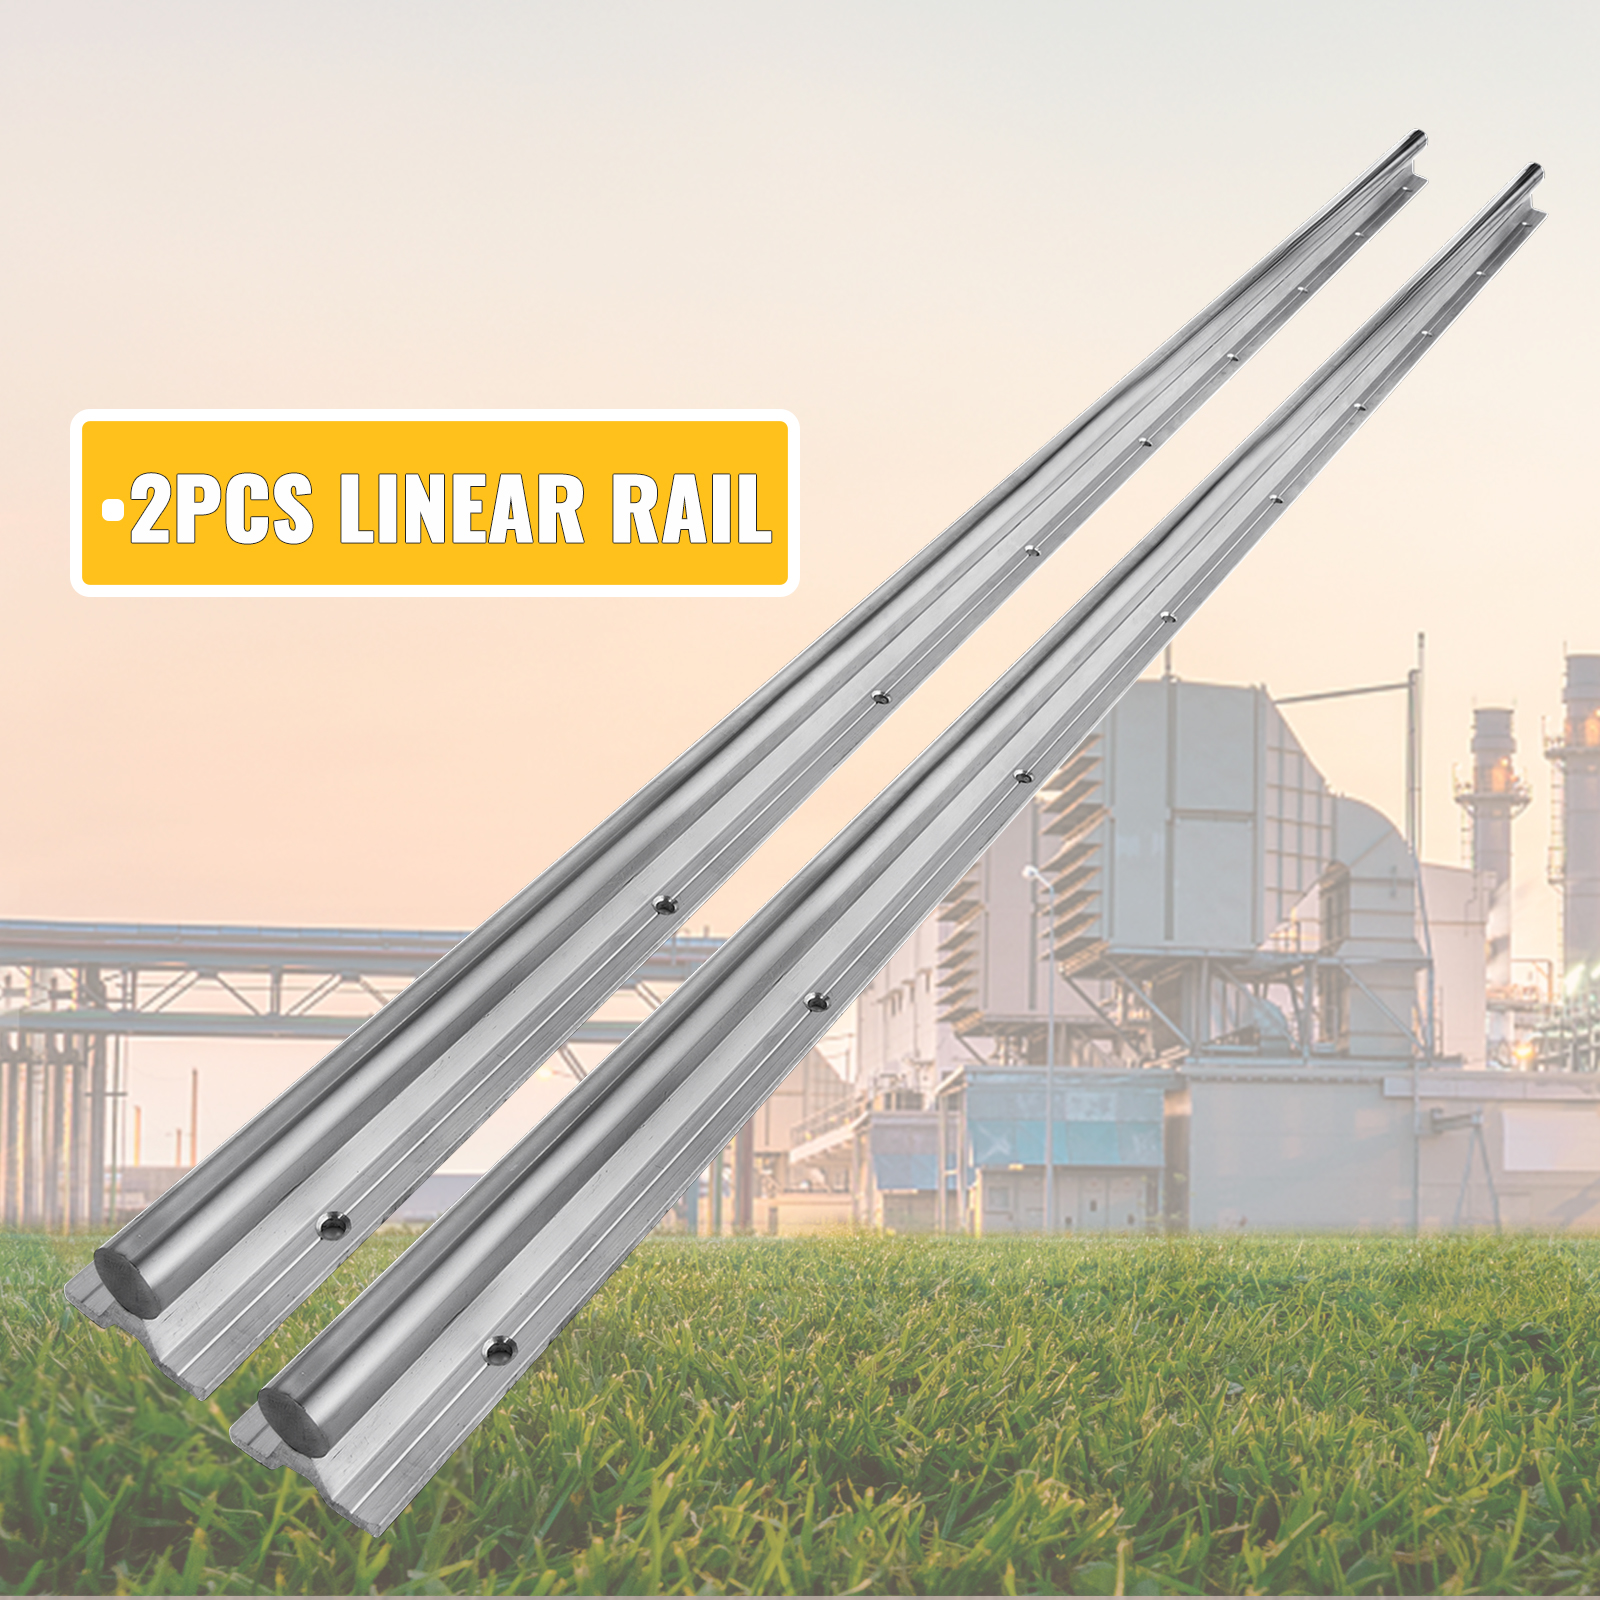 linear rails